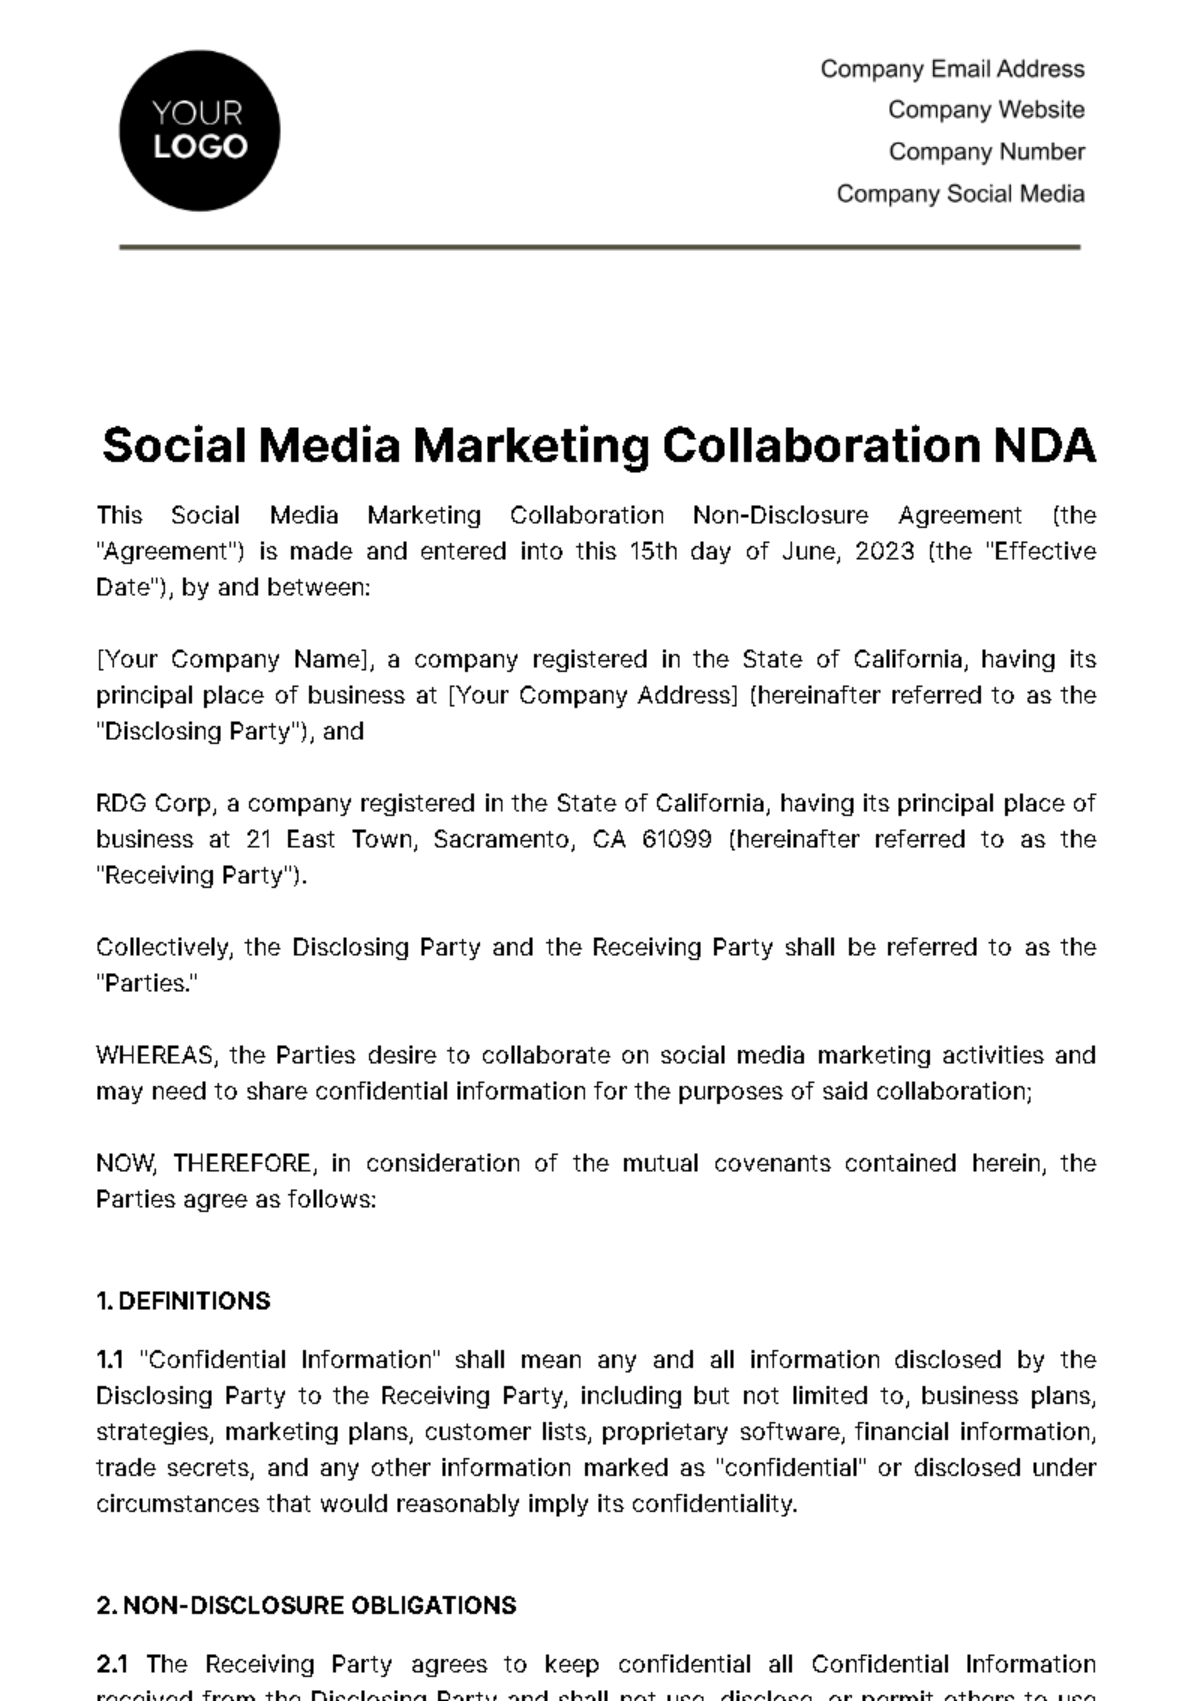 Social Media Marketing Collaboration NDA Template